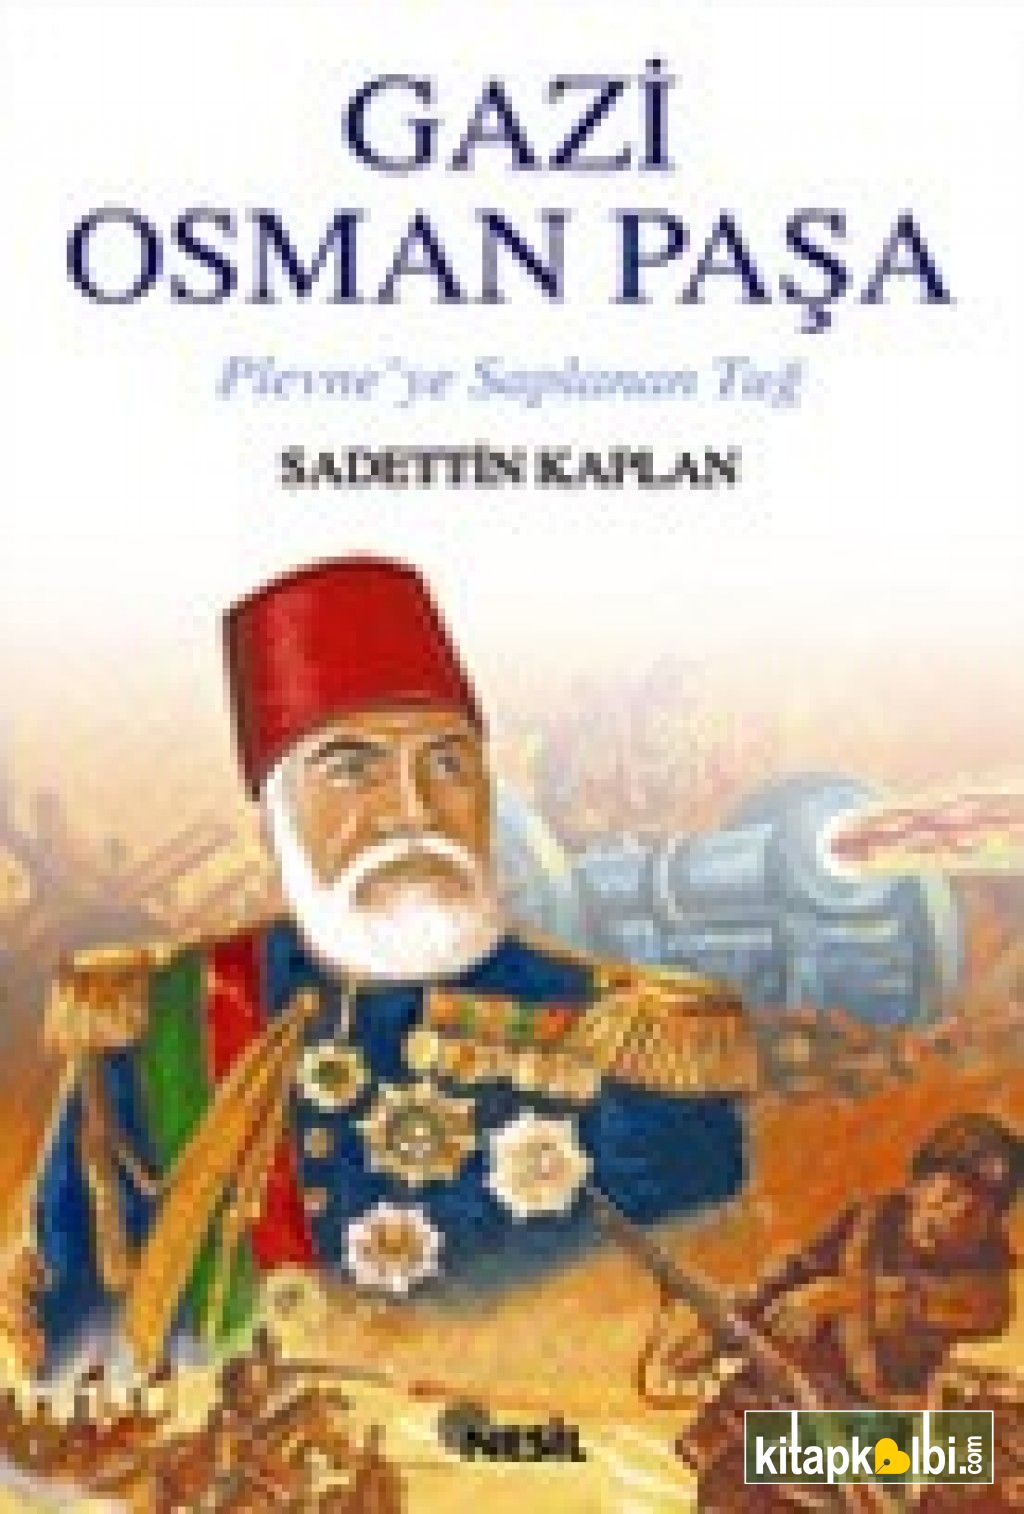 Gazi Osman Paşa Plevne`ye Saplanan Tuğ